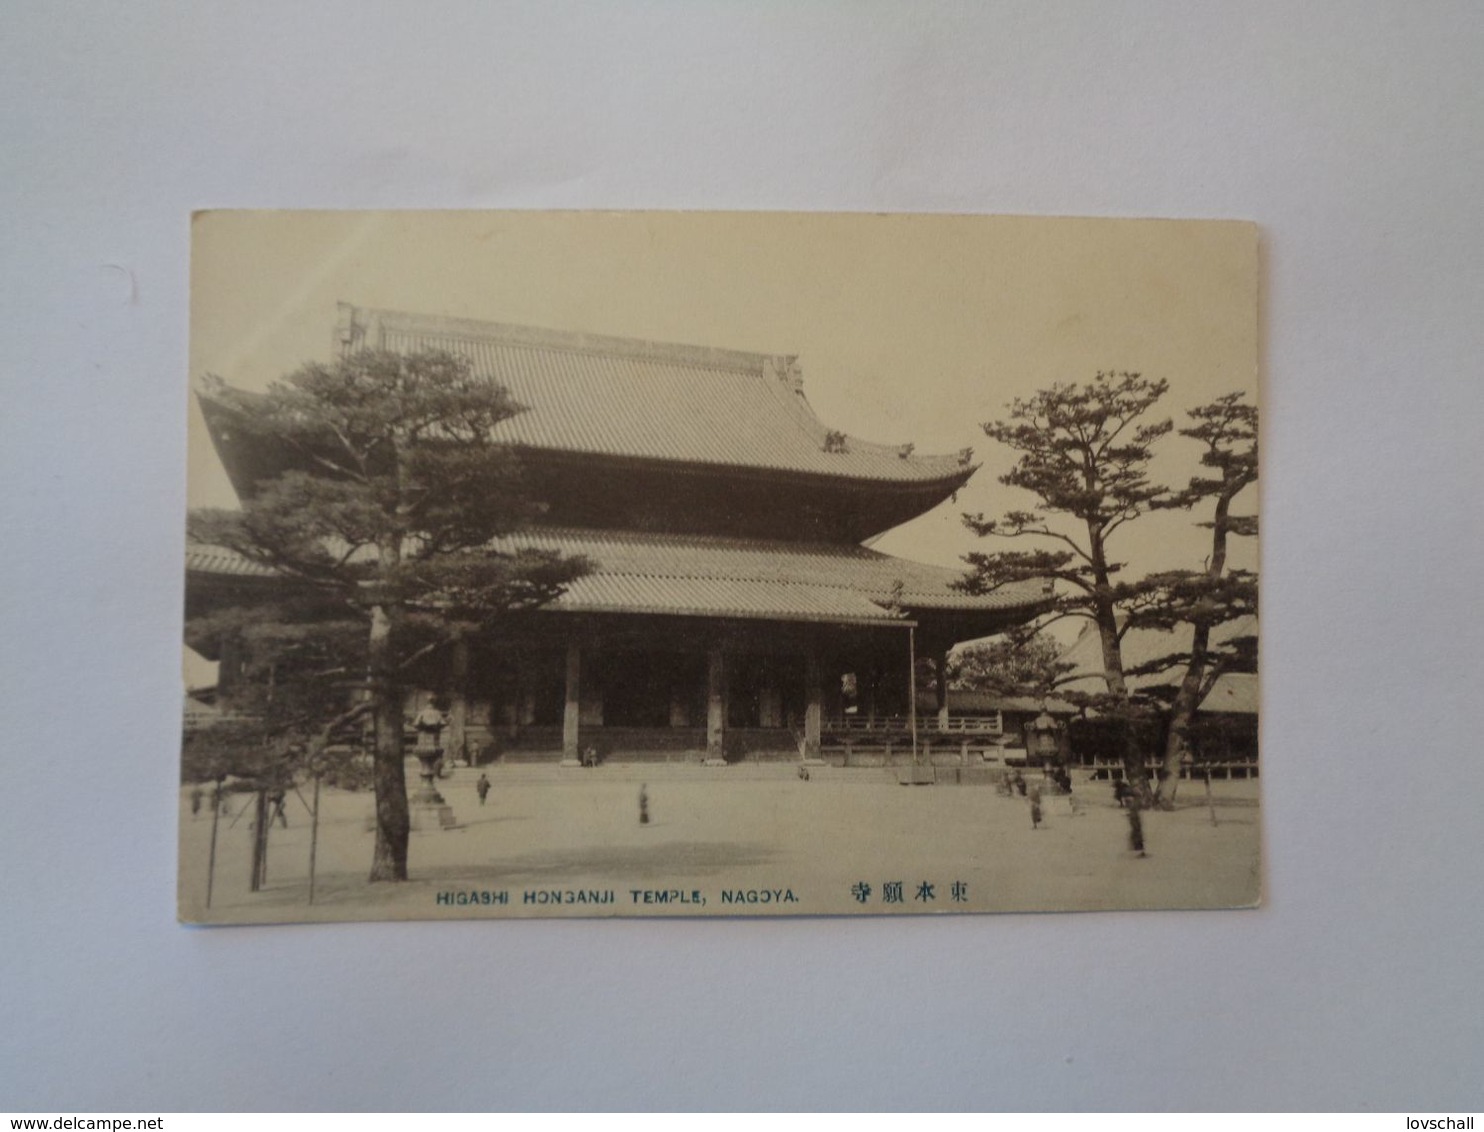 Nagoya. - Higashi Honganji Temple. - Nagoya